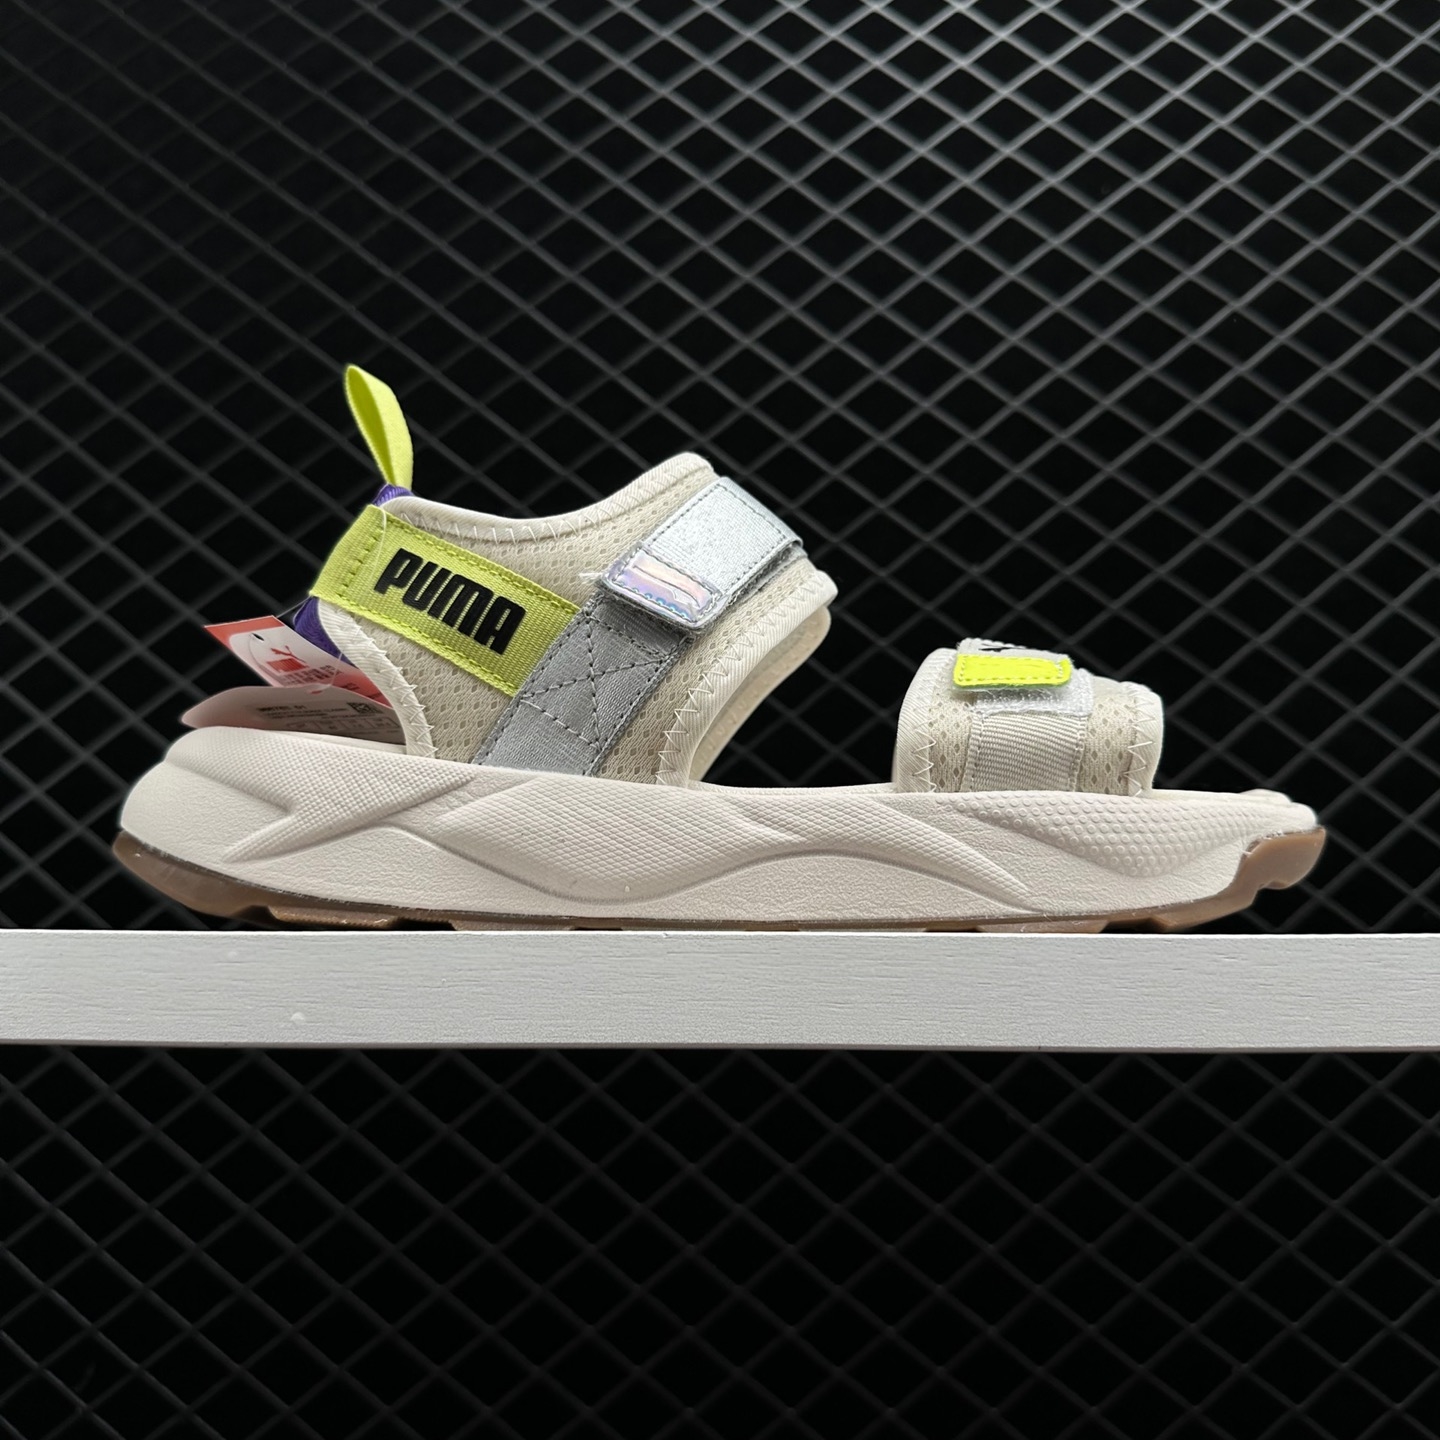 Puma RS-Sandal Iridescent White Gum - 368763 01 | Trendy Sporty Footwear